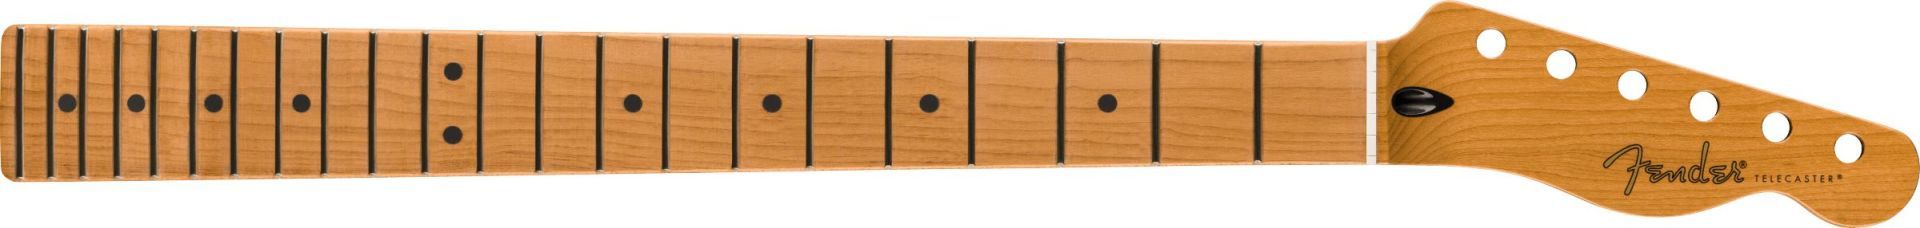 Fender Satin Roasted Maple Telecaster Neck Flat Oval Shape Natural